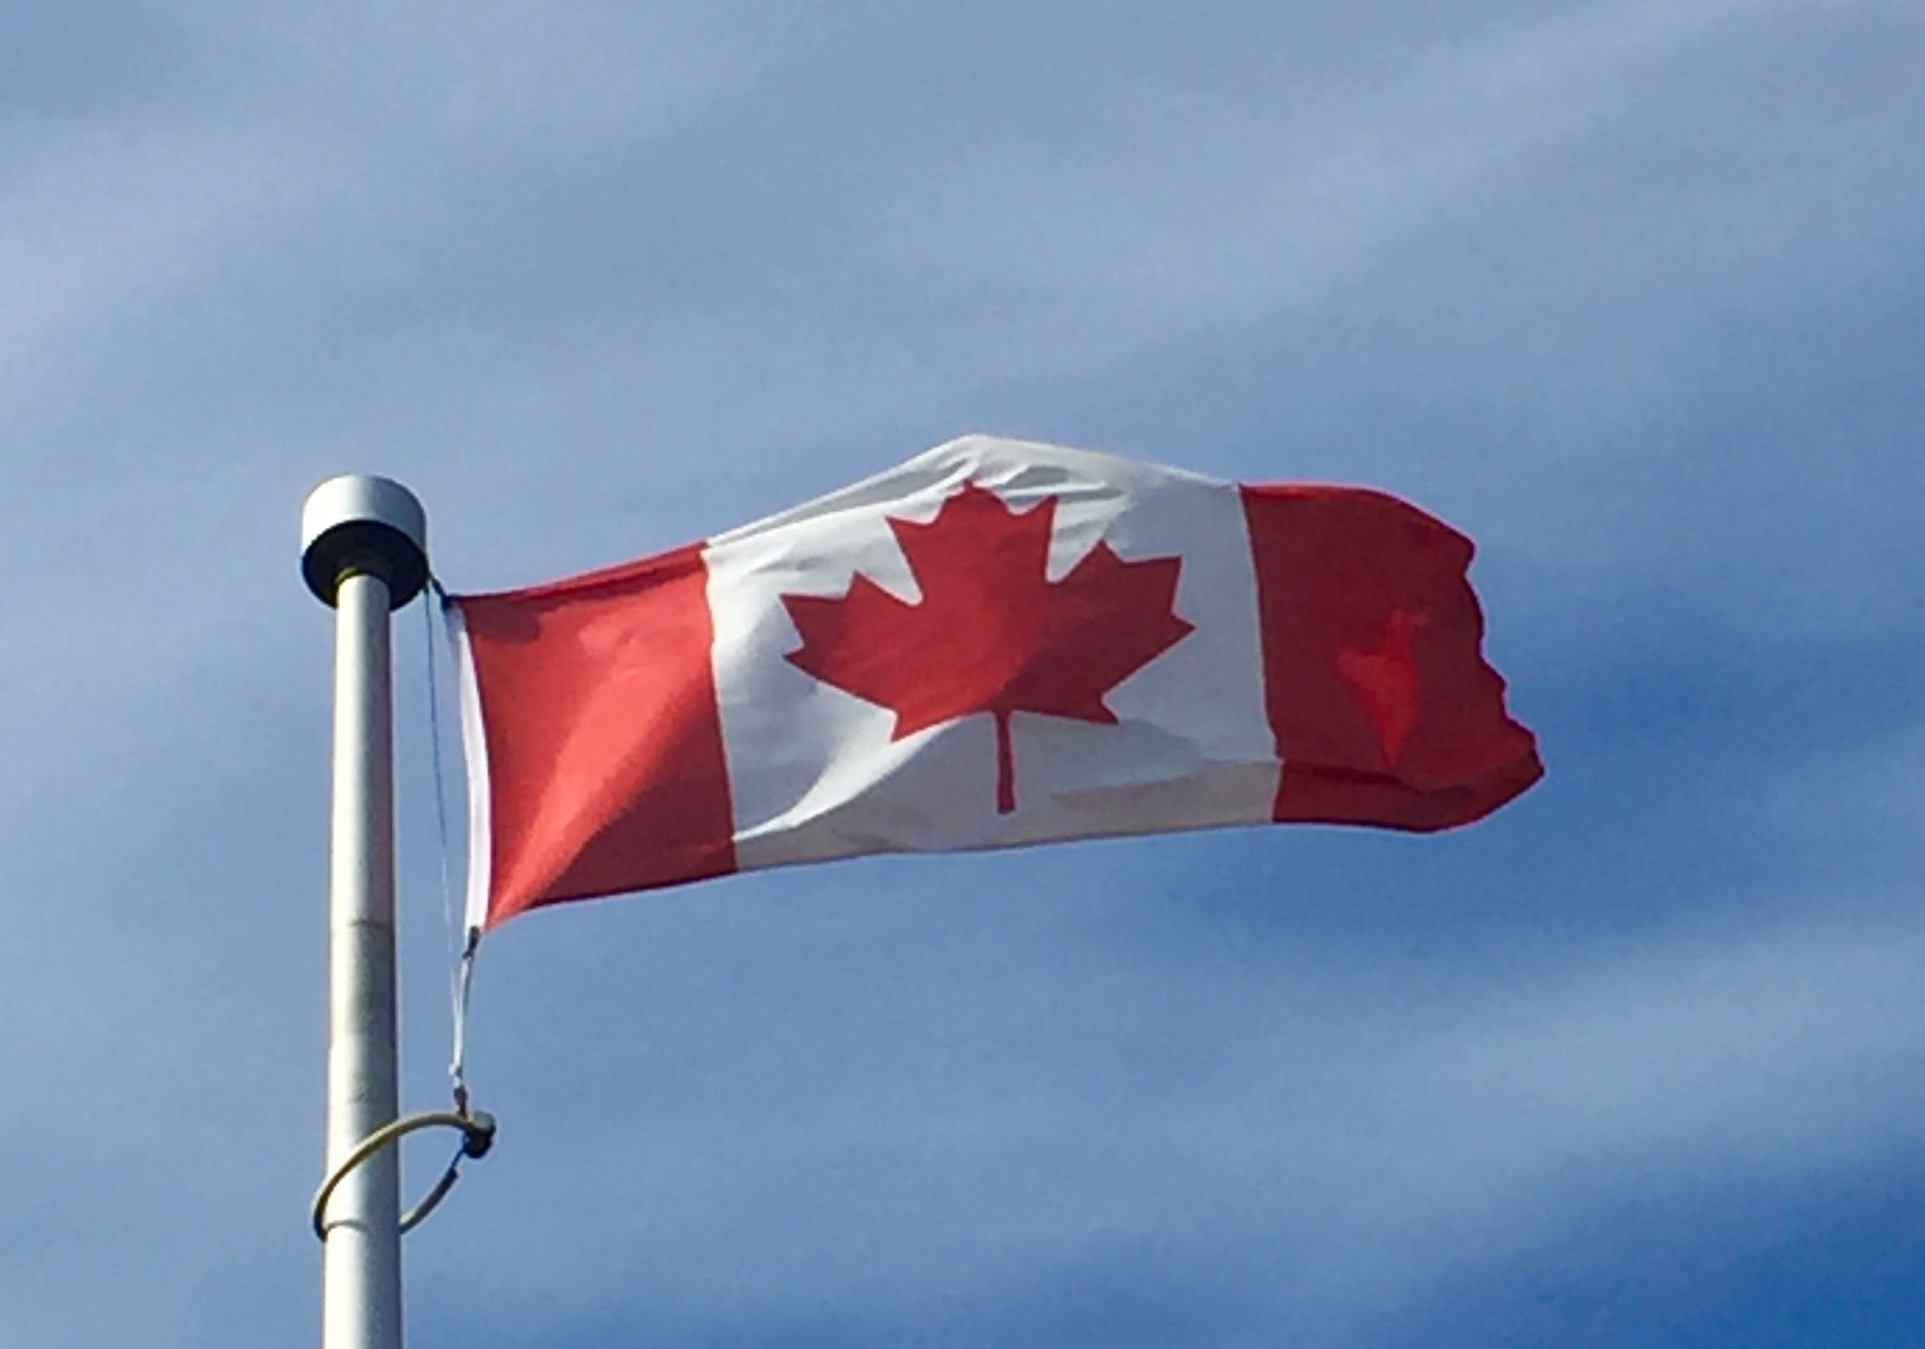 February 24th Proposed Bill C-51, Canadian Flag | OakvilleNews.Org